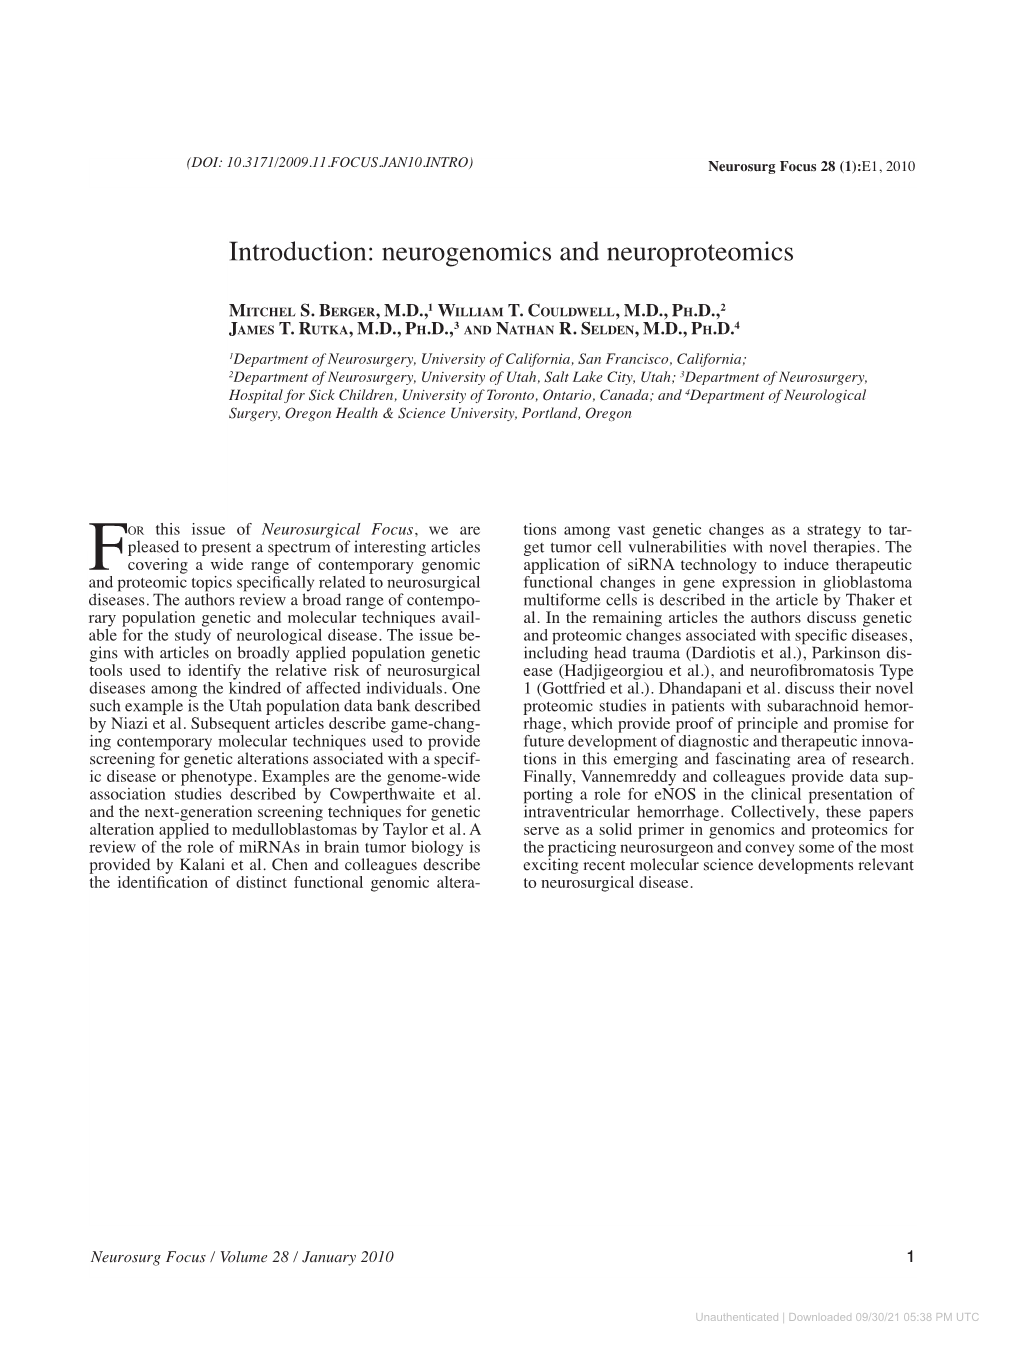 Introduction: Neurogenomics and Neuroproteomics